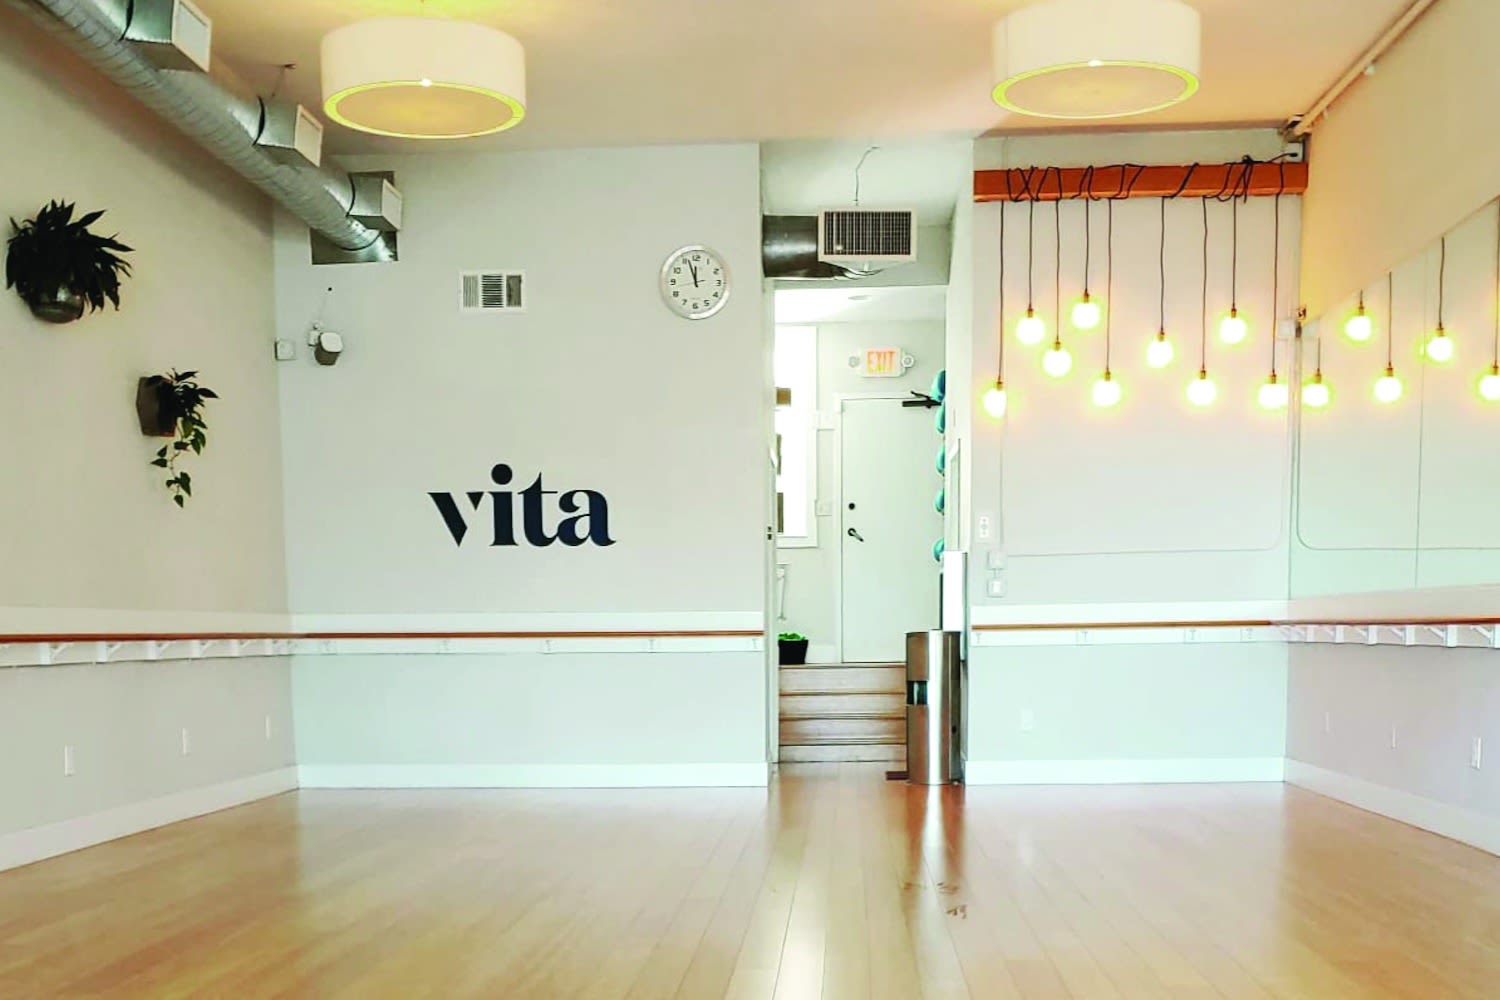 Vita Yoga Oakland Read Reviews And Book Classes On ClassPass